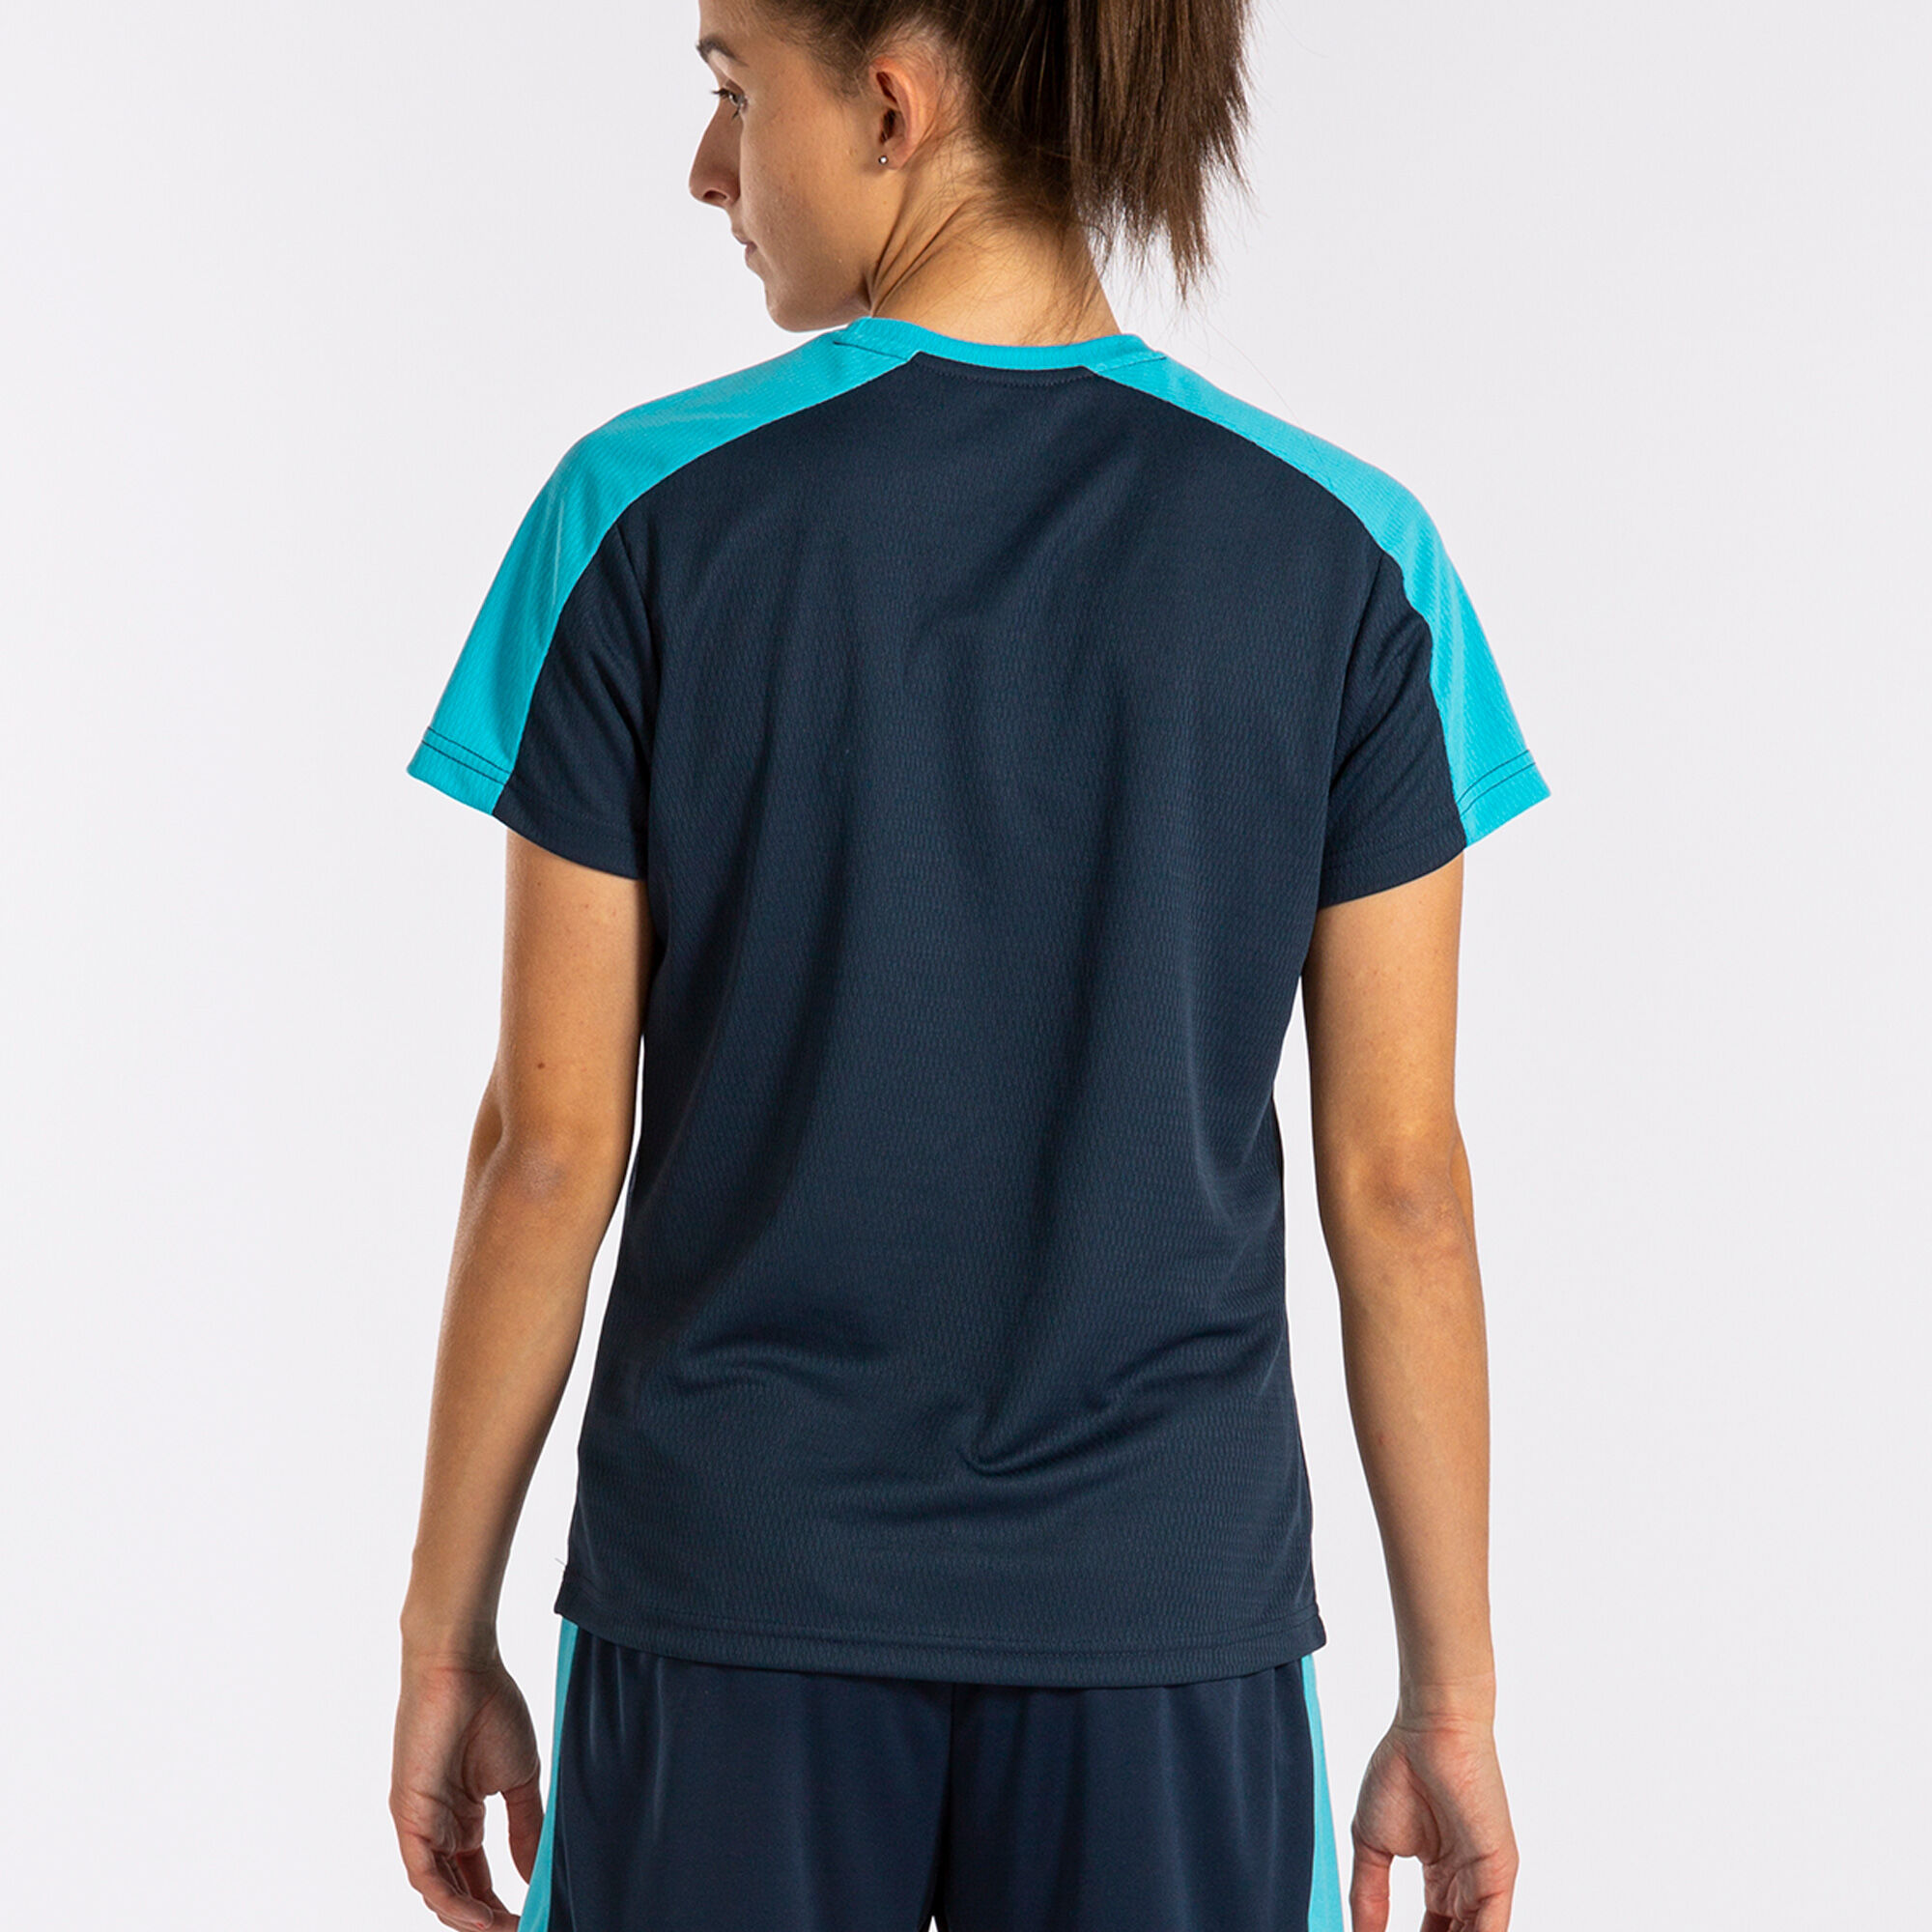 Camiseta manga corta mujer Eco Championship marino turquesa flúor